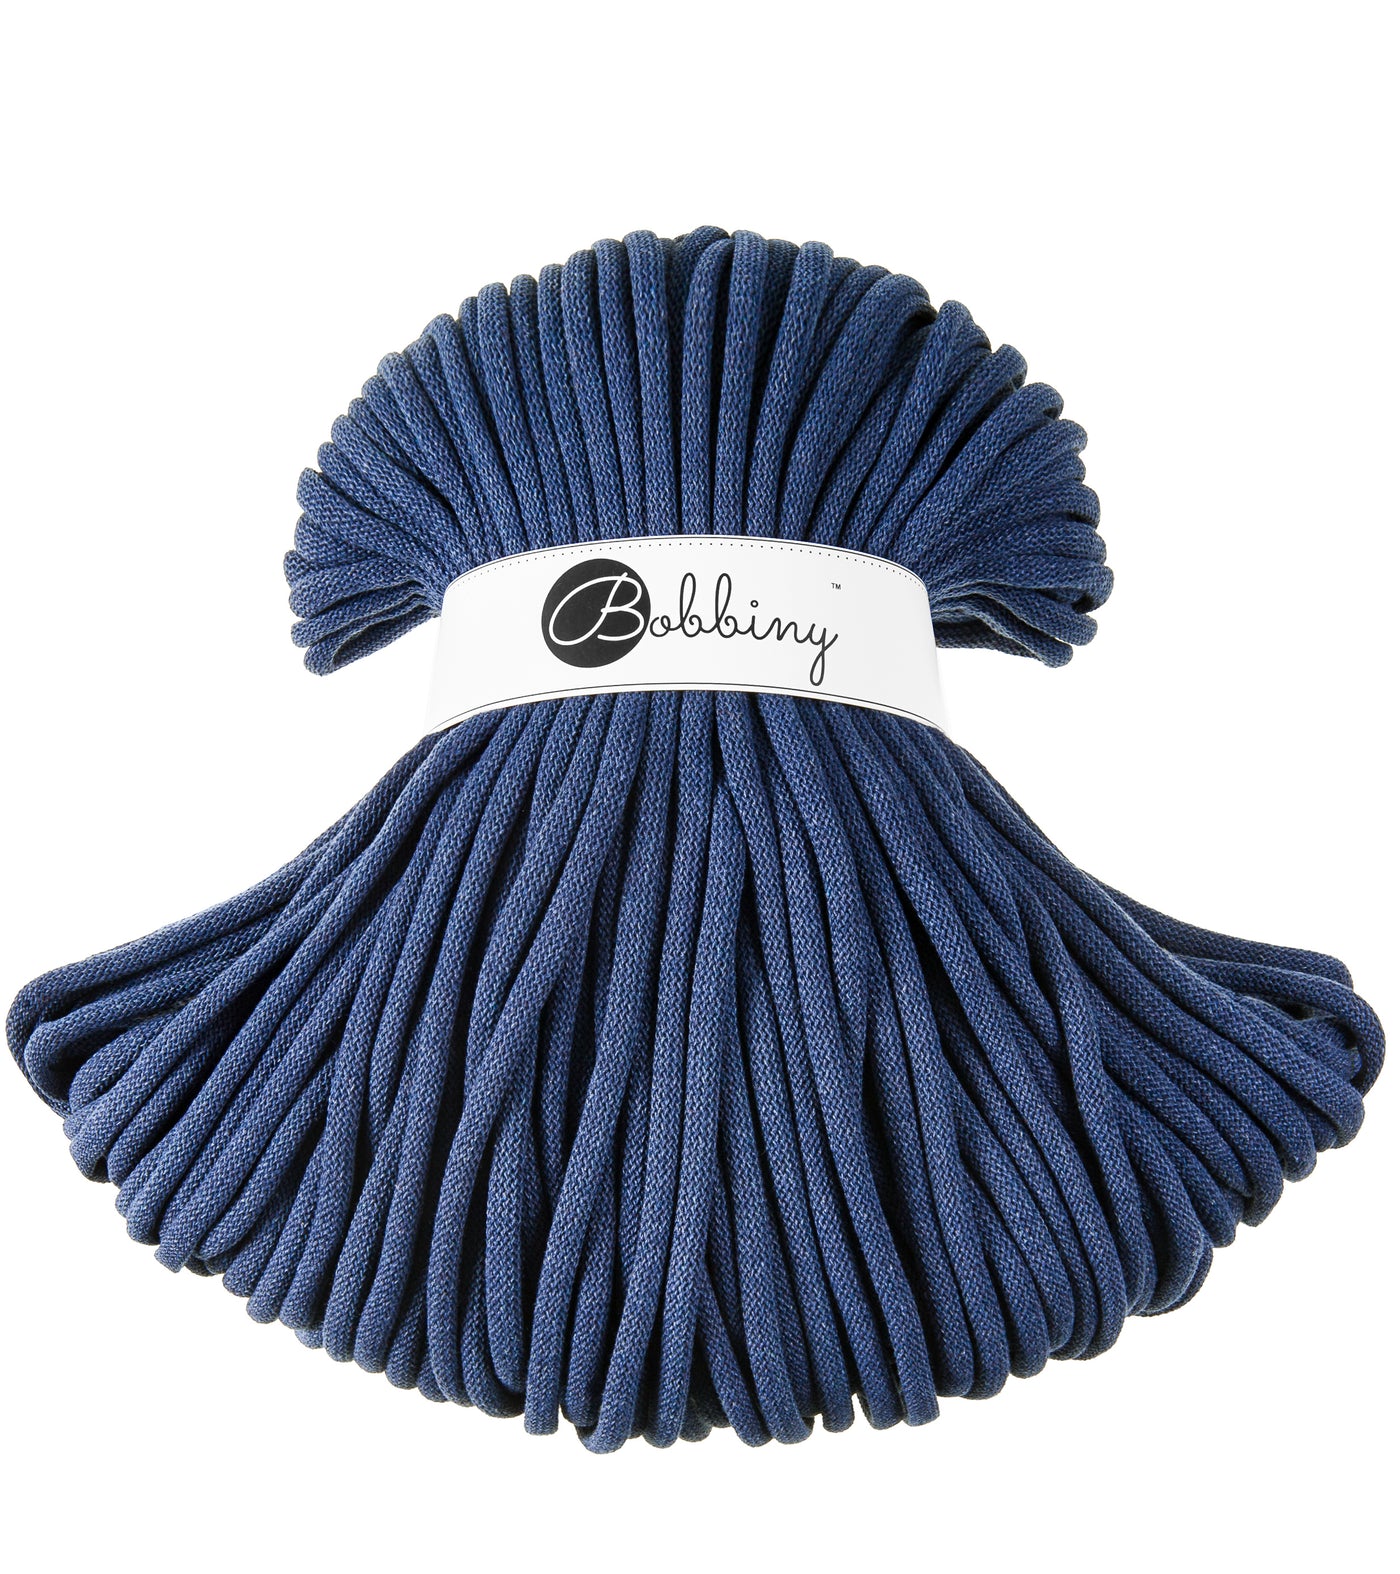 Jeans/denim shade braided cord 9mm